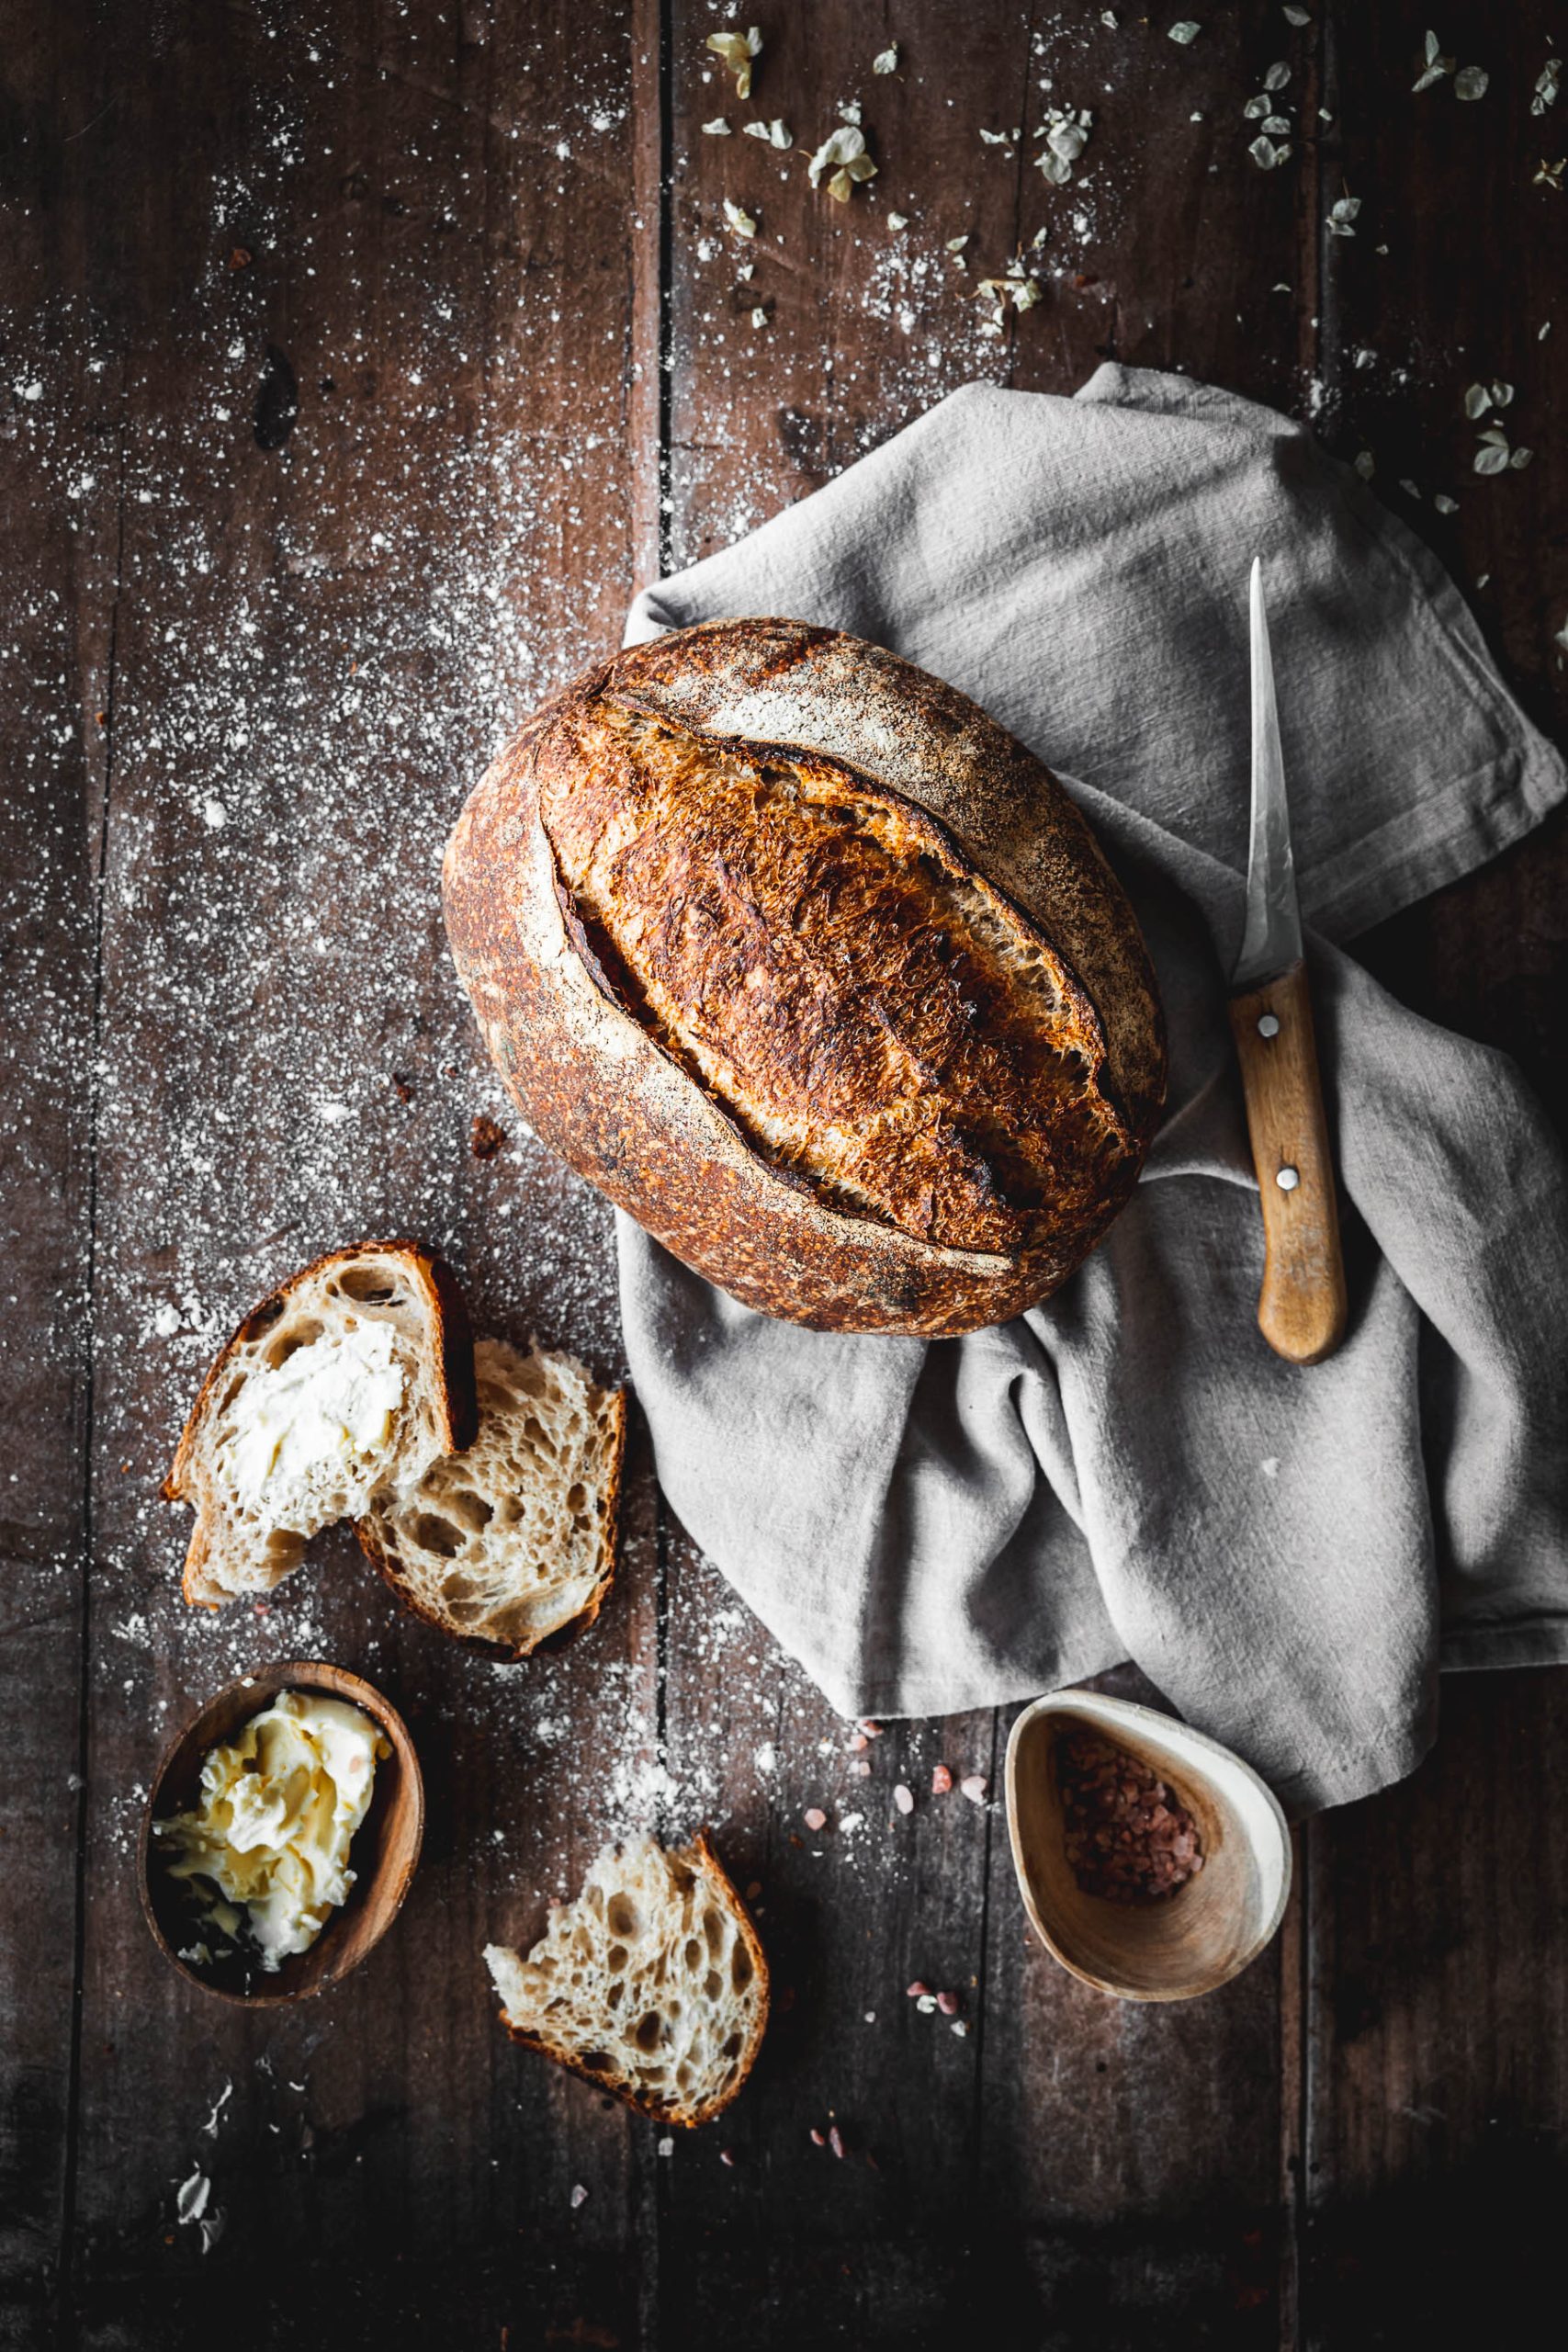 Sourdough bread photography by Zuzana Rainet, Slovak food photographer from Bratislava